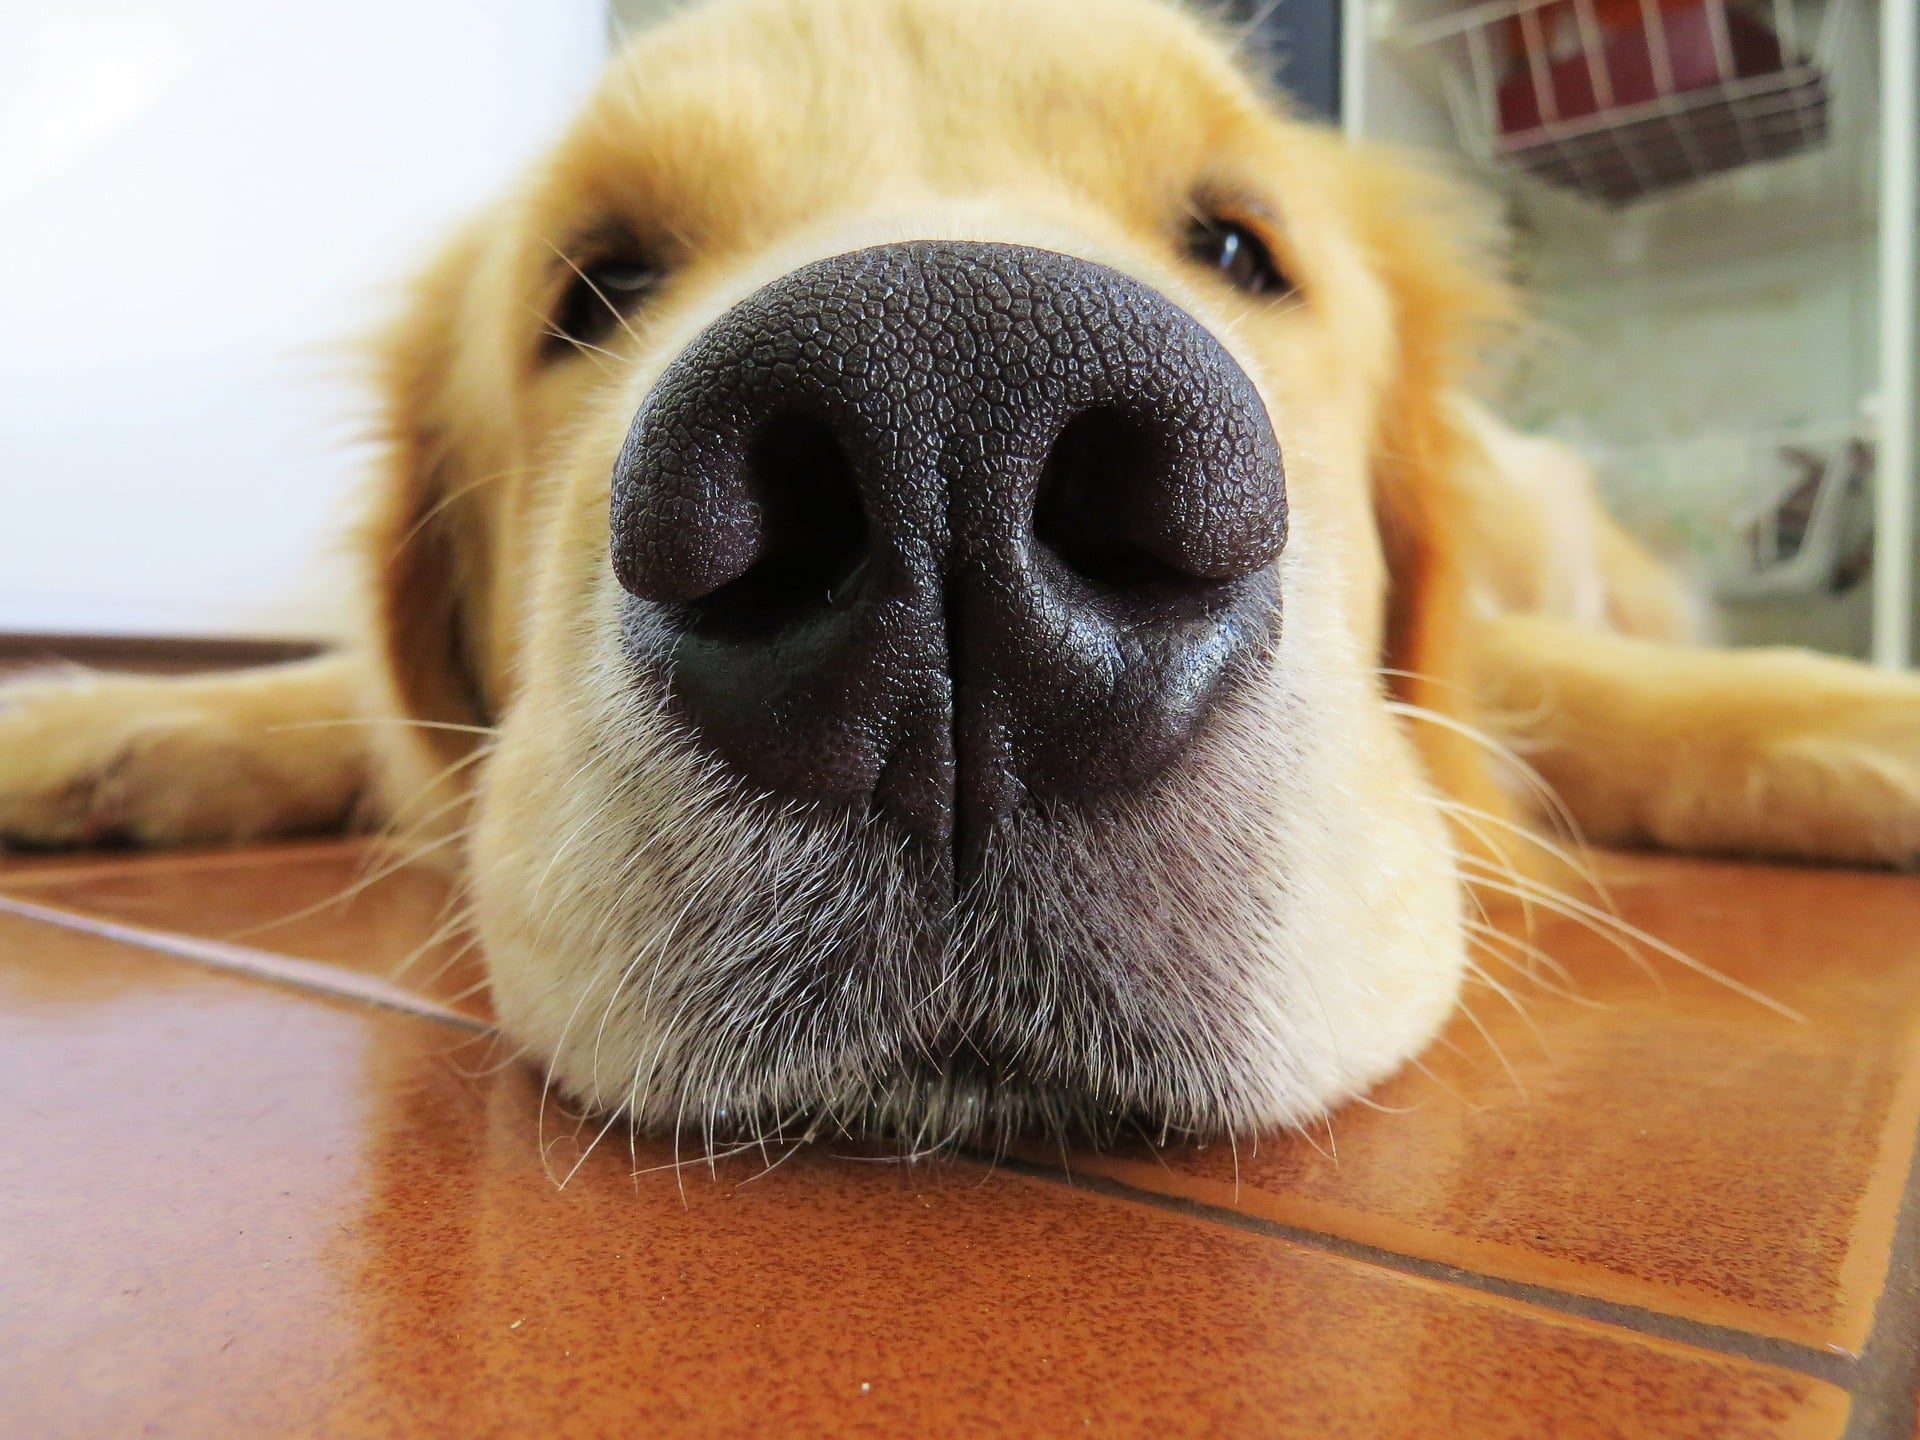 Another closeup of a dog's nose